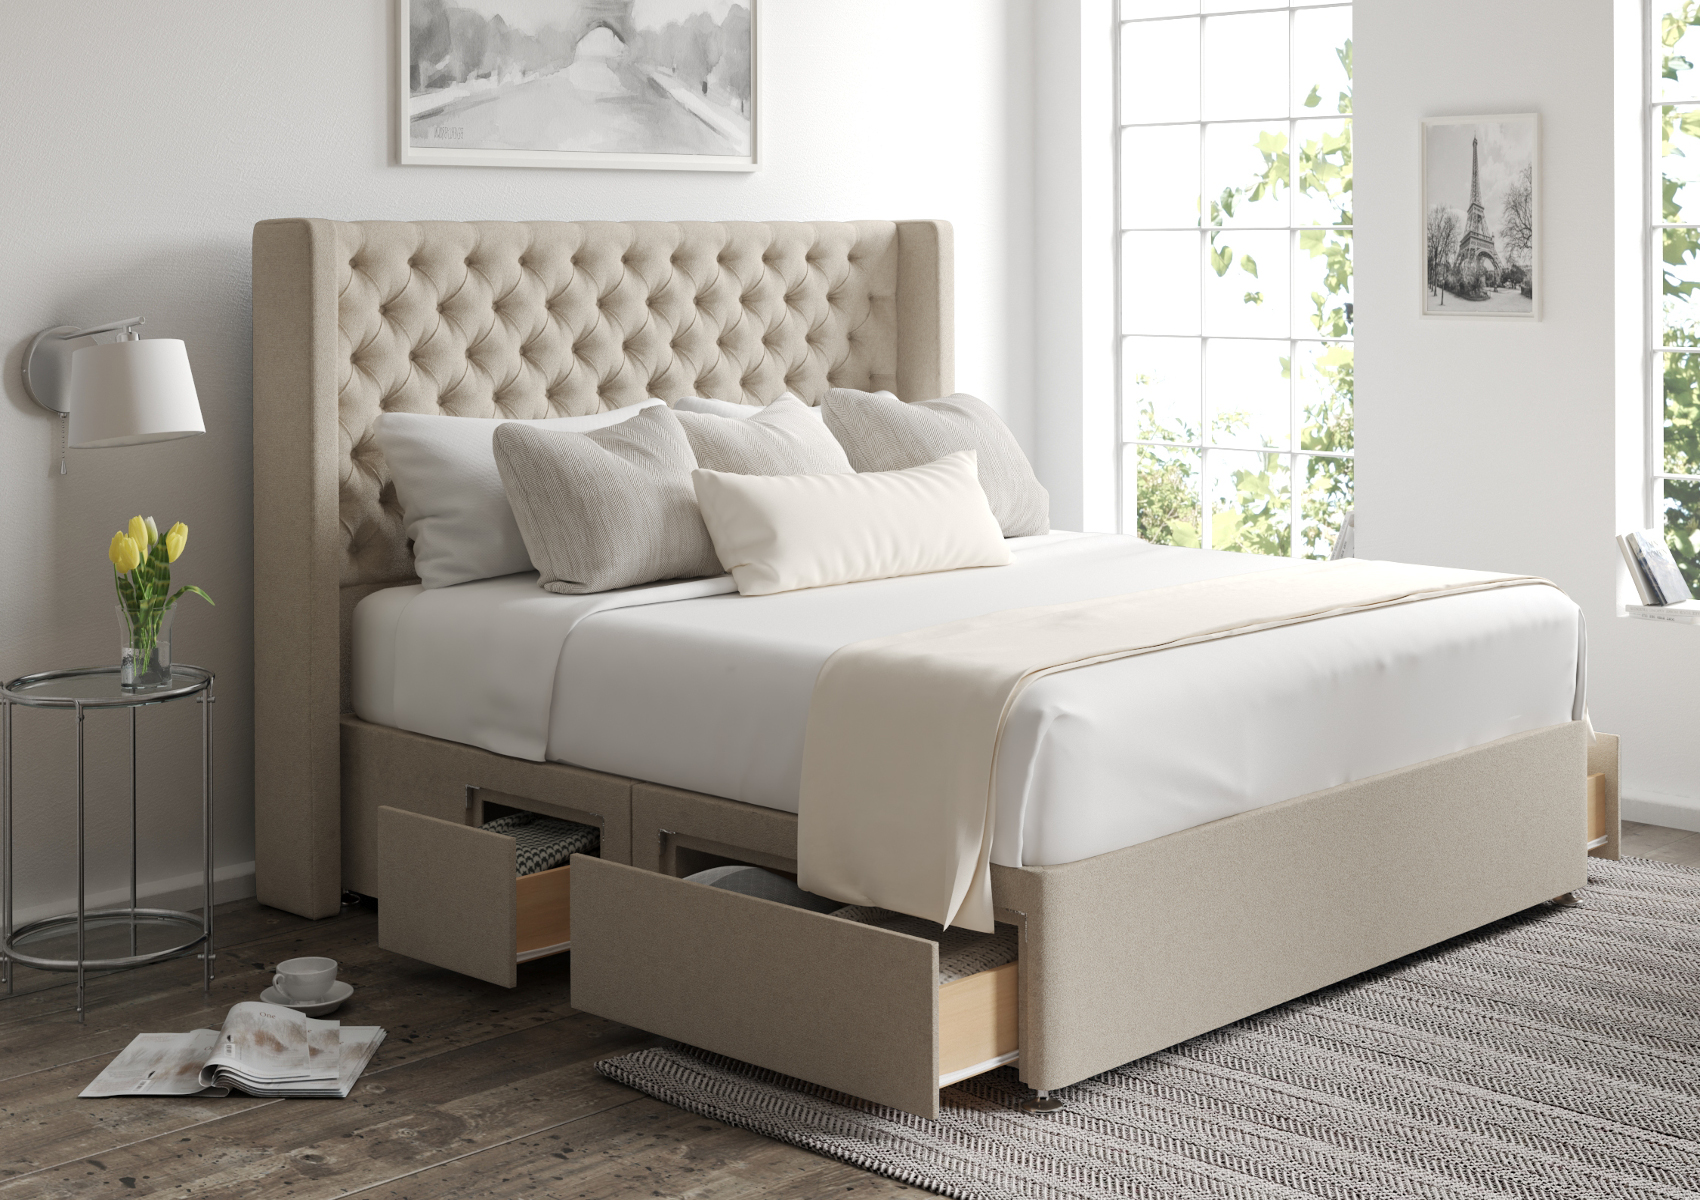 View Bella Hugo Royal Upholstered King Size Storage Bed Time4Sleep information